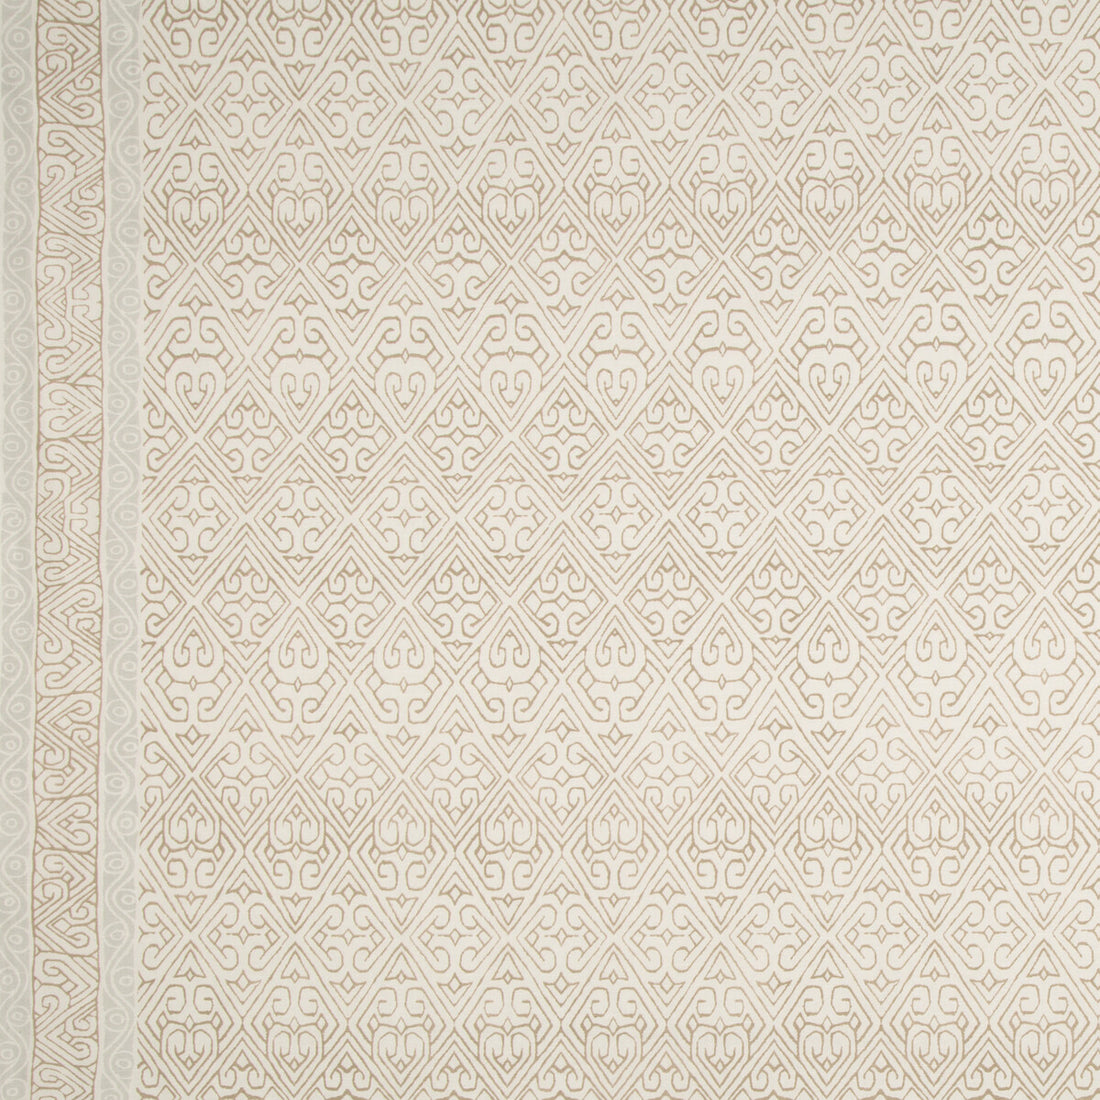 Cantara fabric in linen/beige color - pattern GWF-3519.616.0 - by Lee Jofa Modern